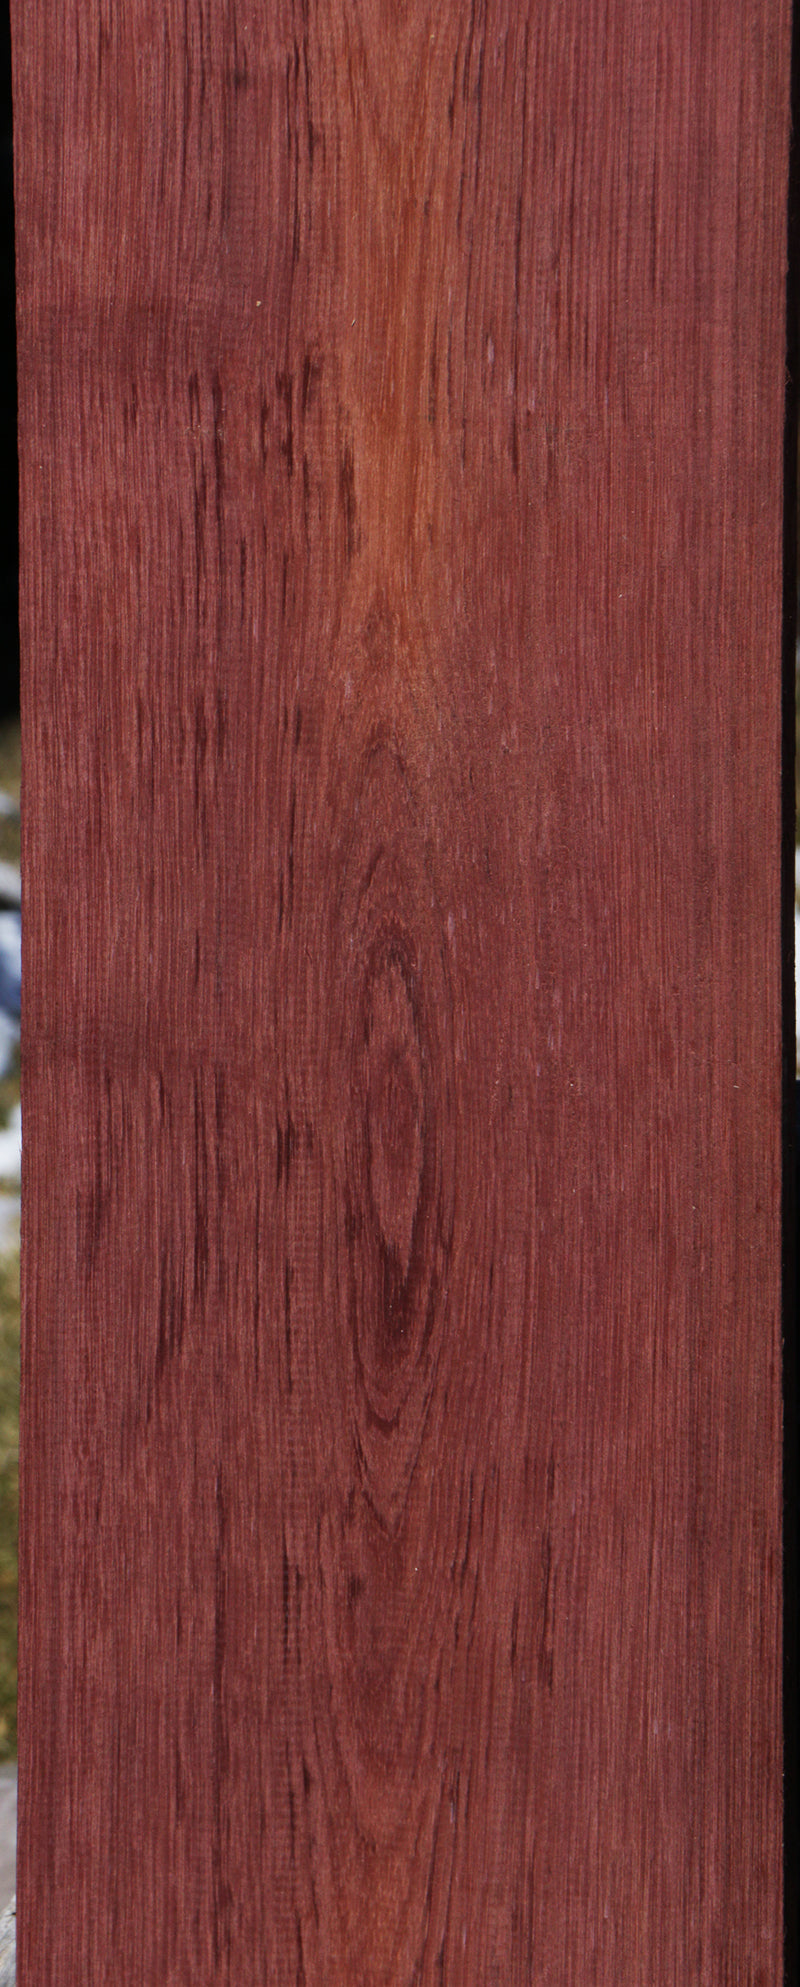 Purpleheart Lumber